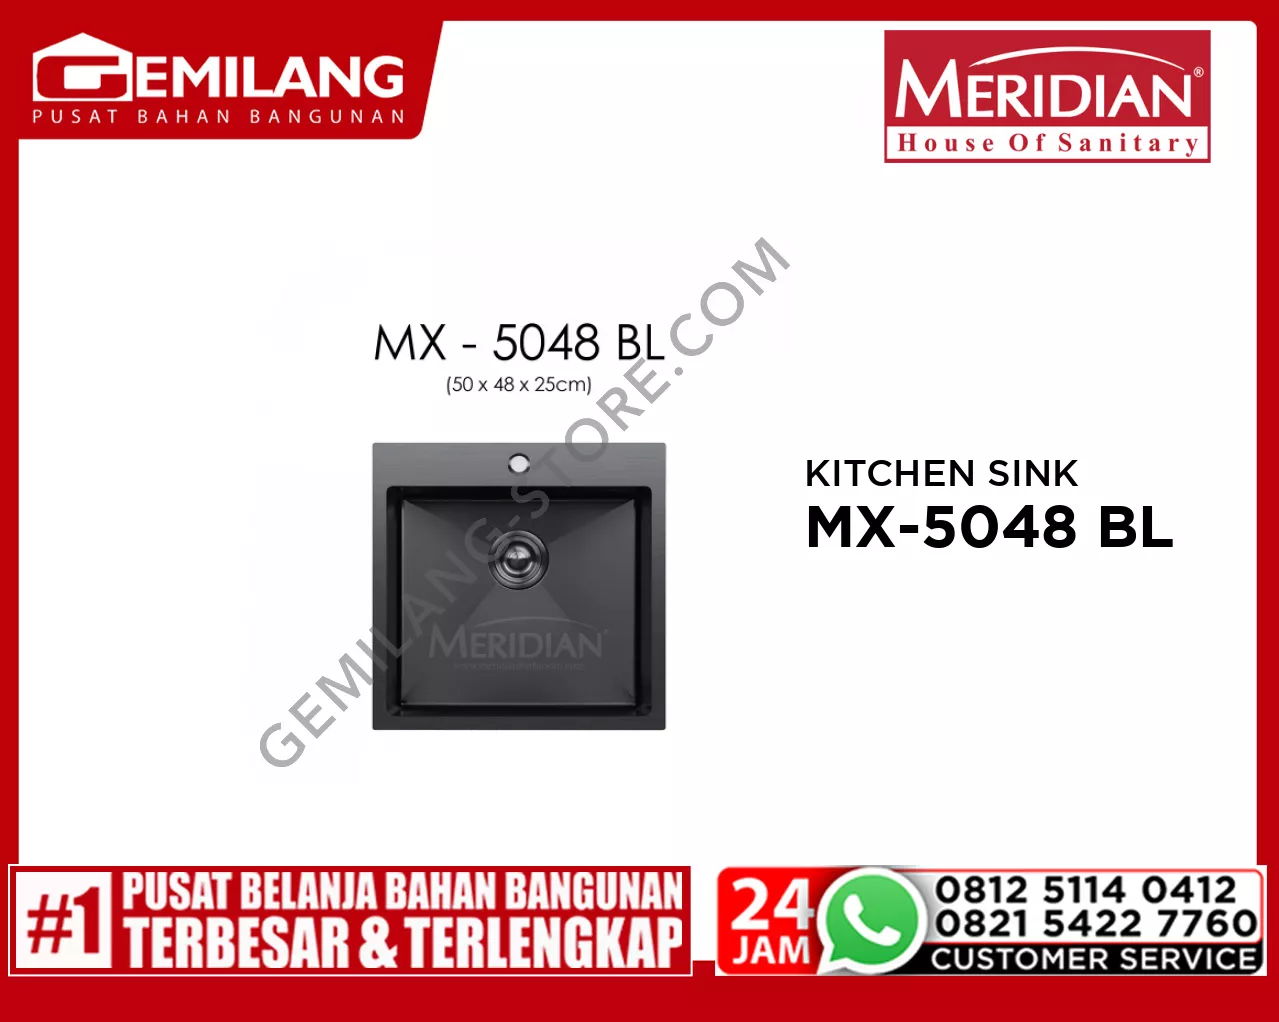 MERIDIAN KITCHEN SINK MX-5048 BLACK